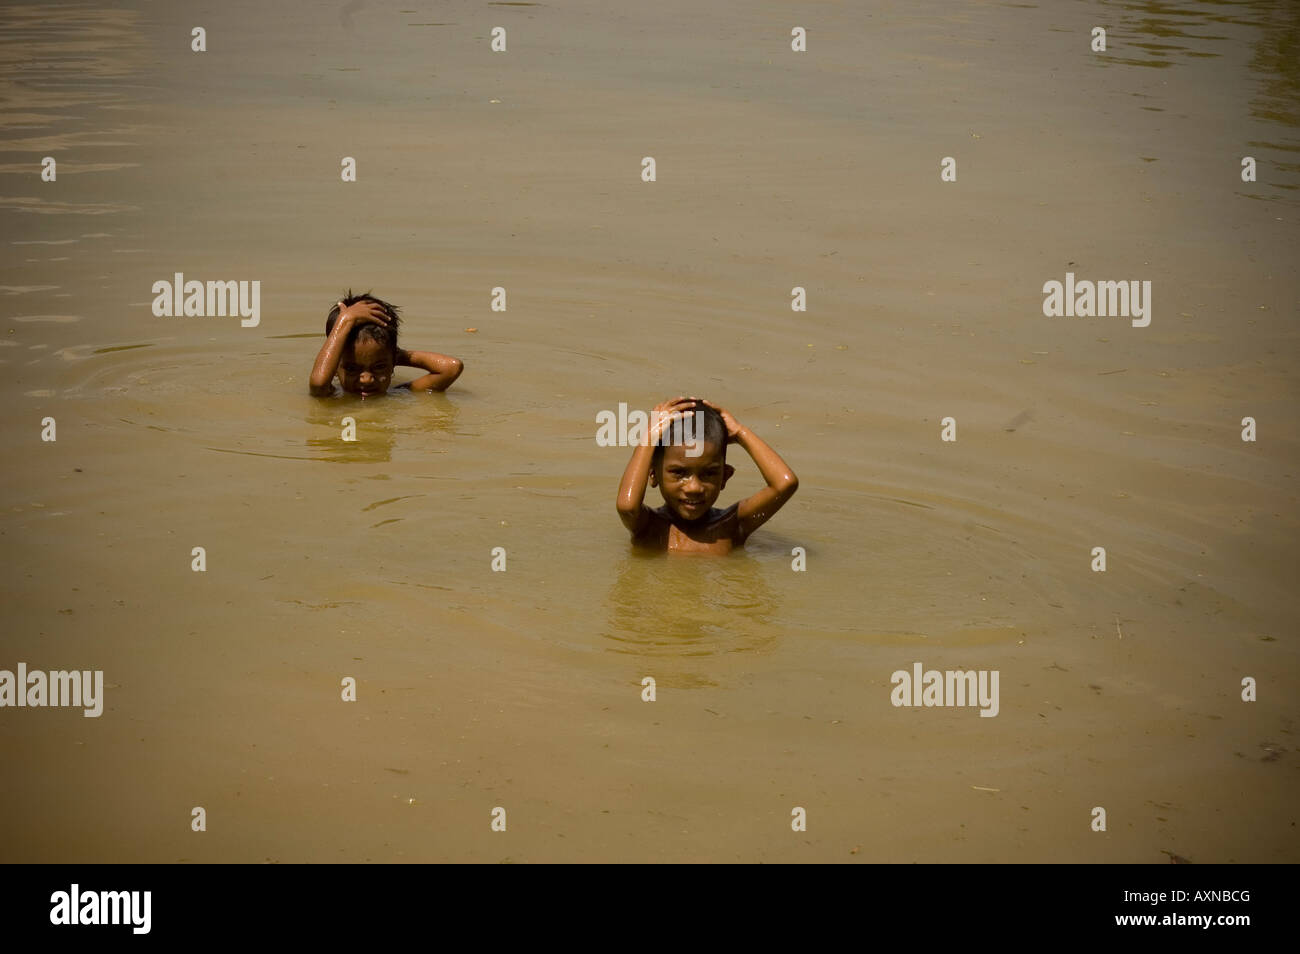 Washing in the river, Bangladesh Stock Photo